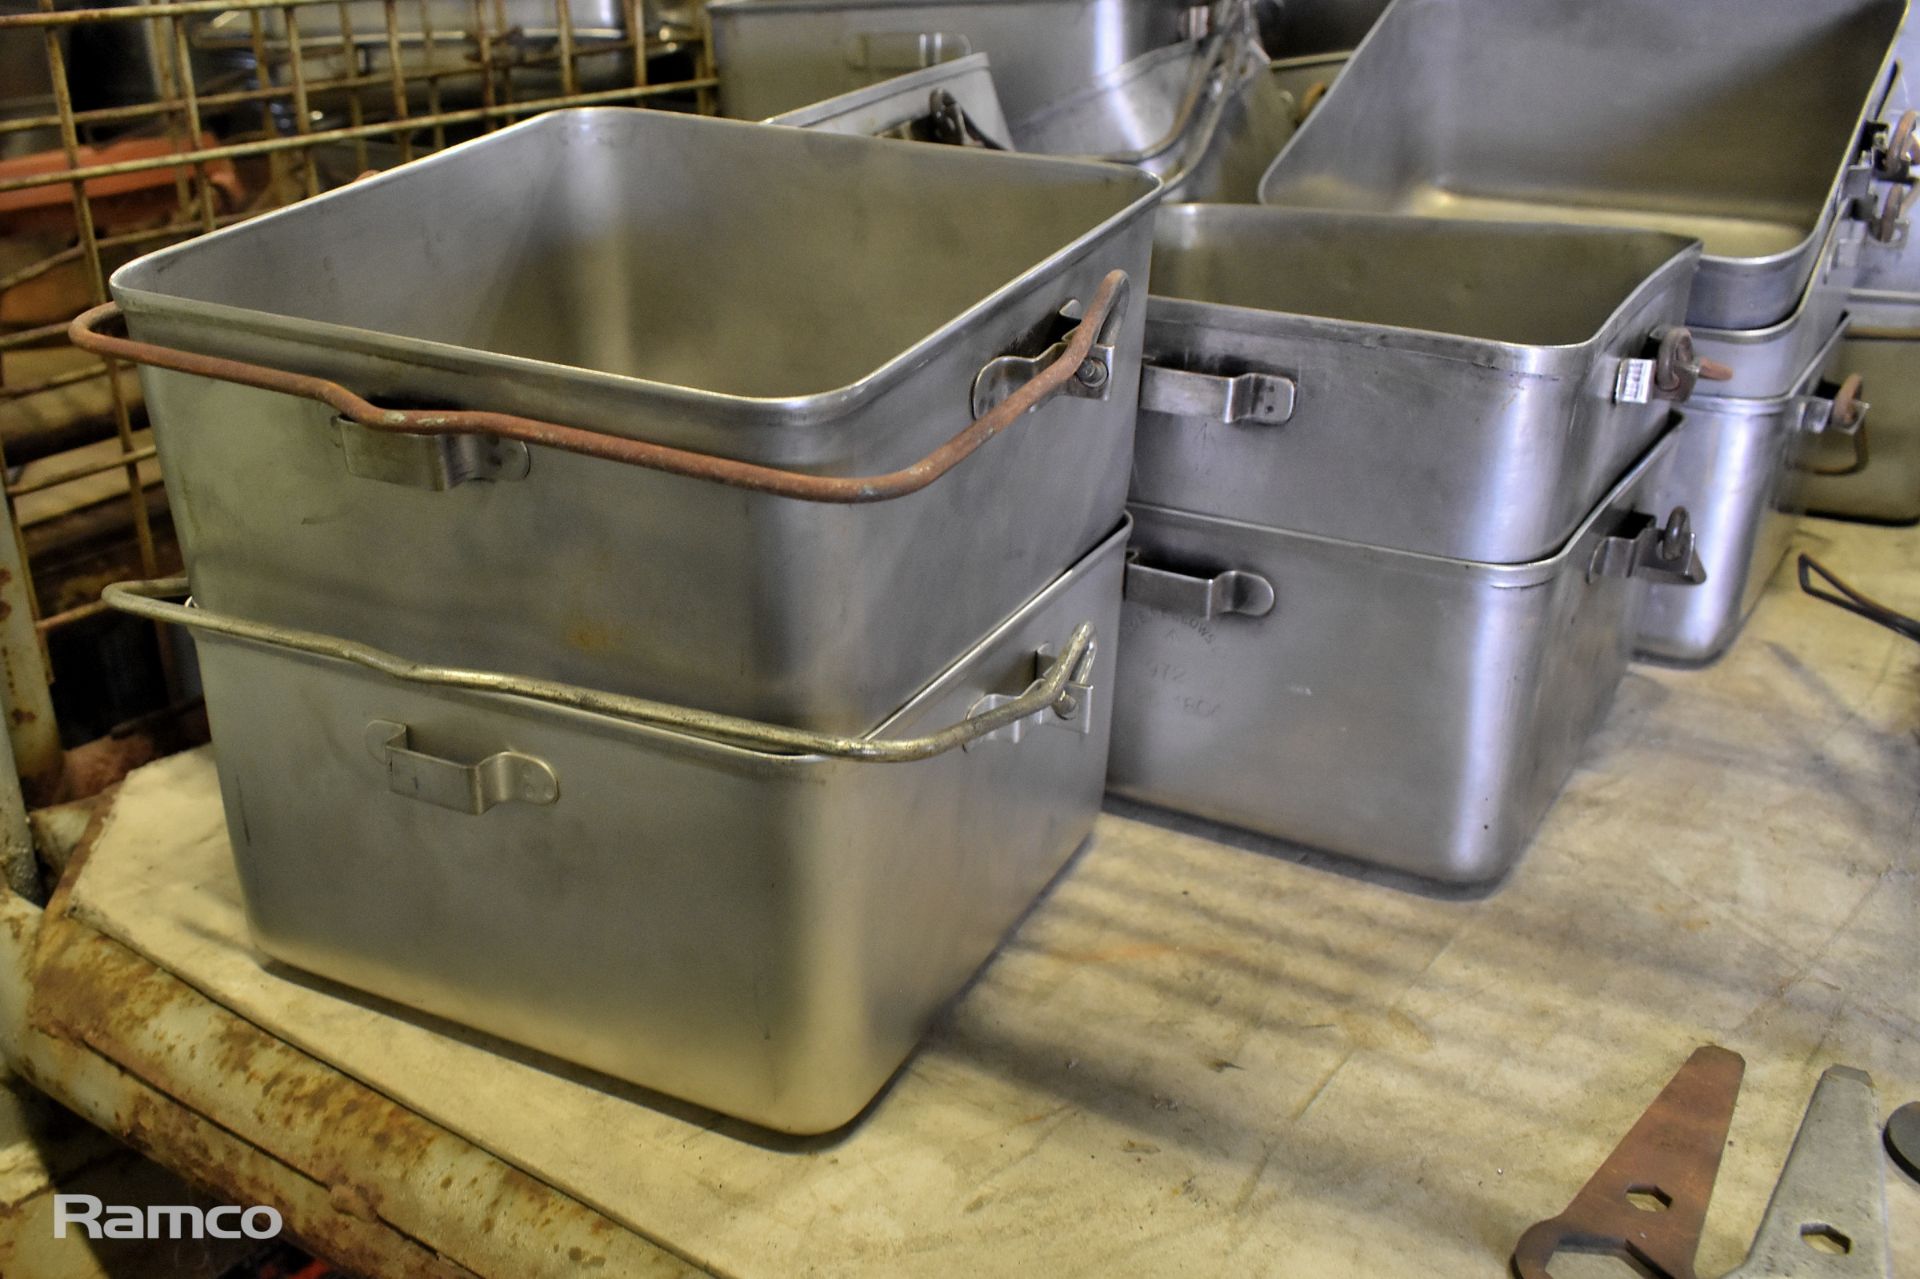 20x E fellows portable cooking pots - cooking pot lids - Image 2 of 5